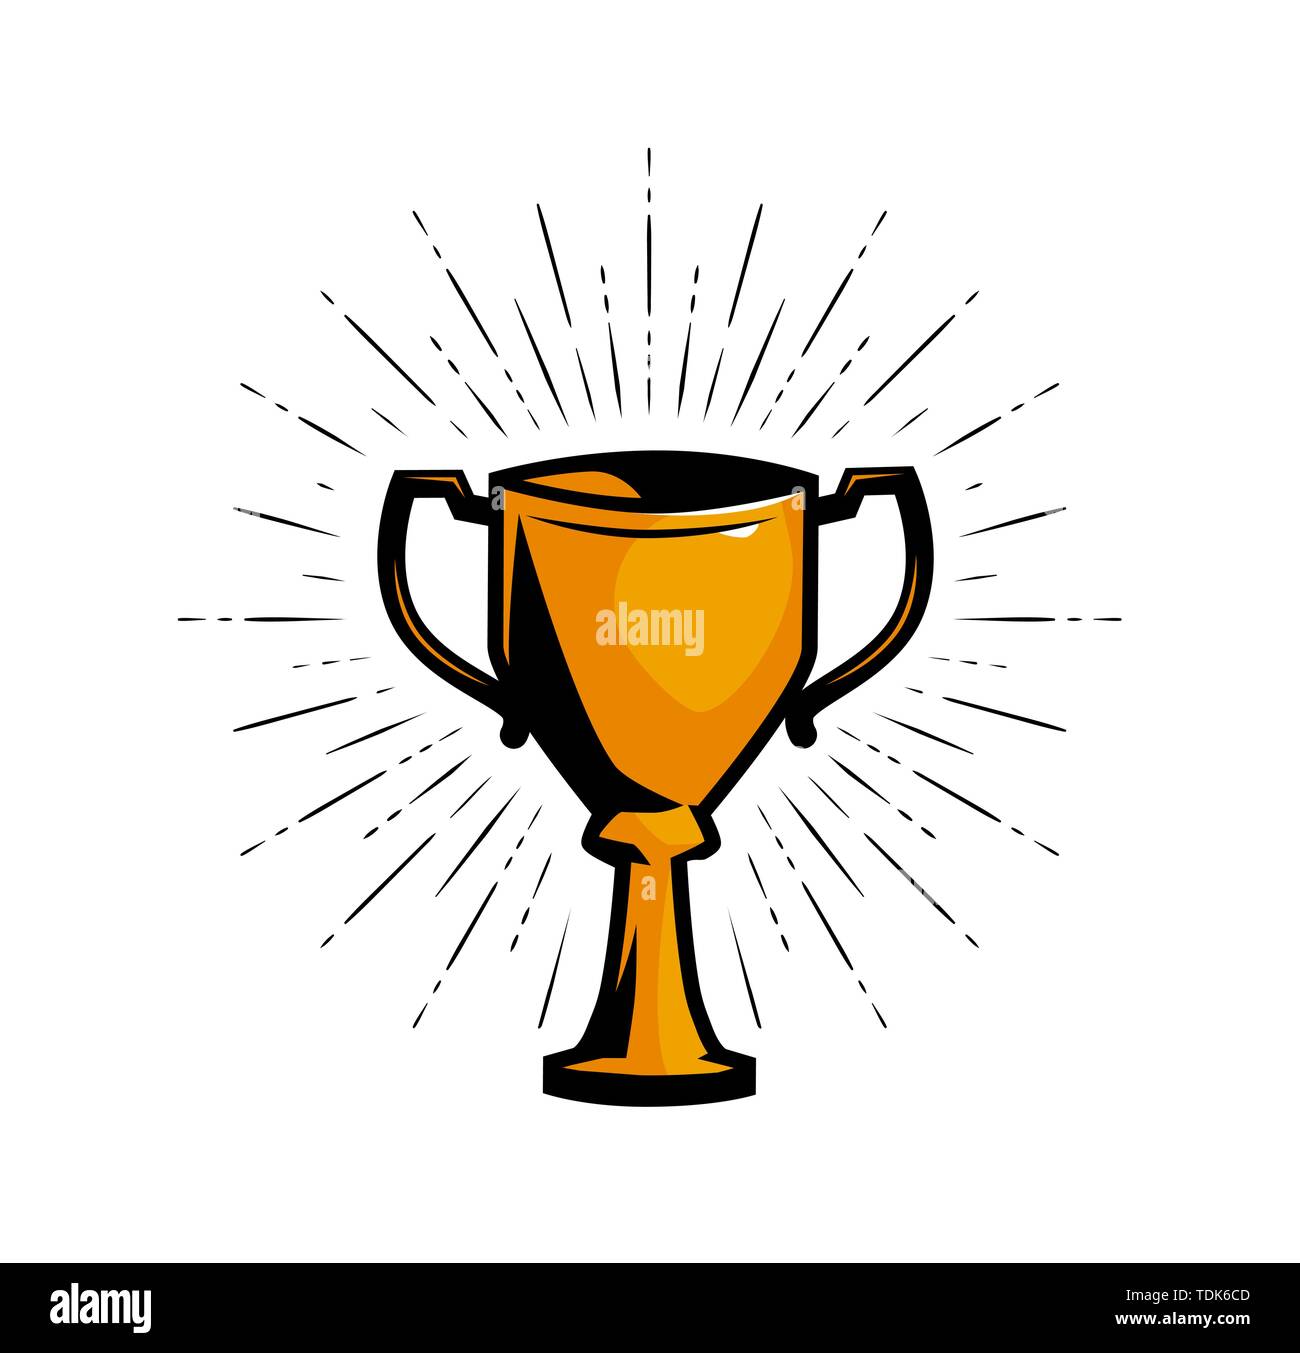 Gold Cup vincitore, achievement award illustrazione vettoriale Illustrazione Vettoriale